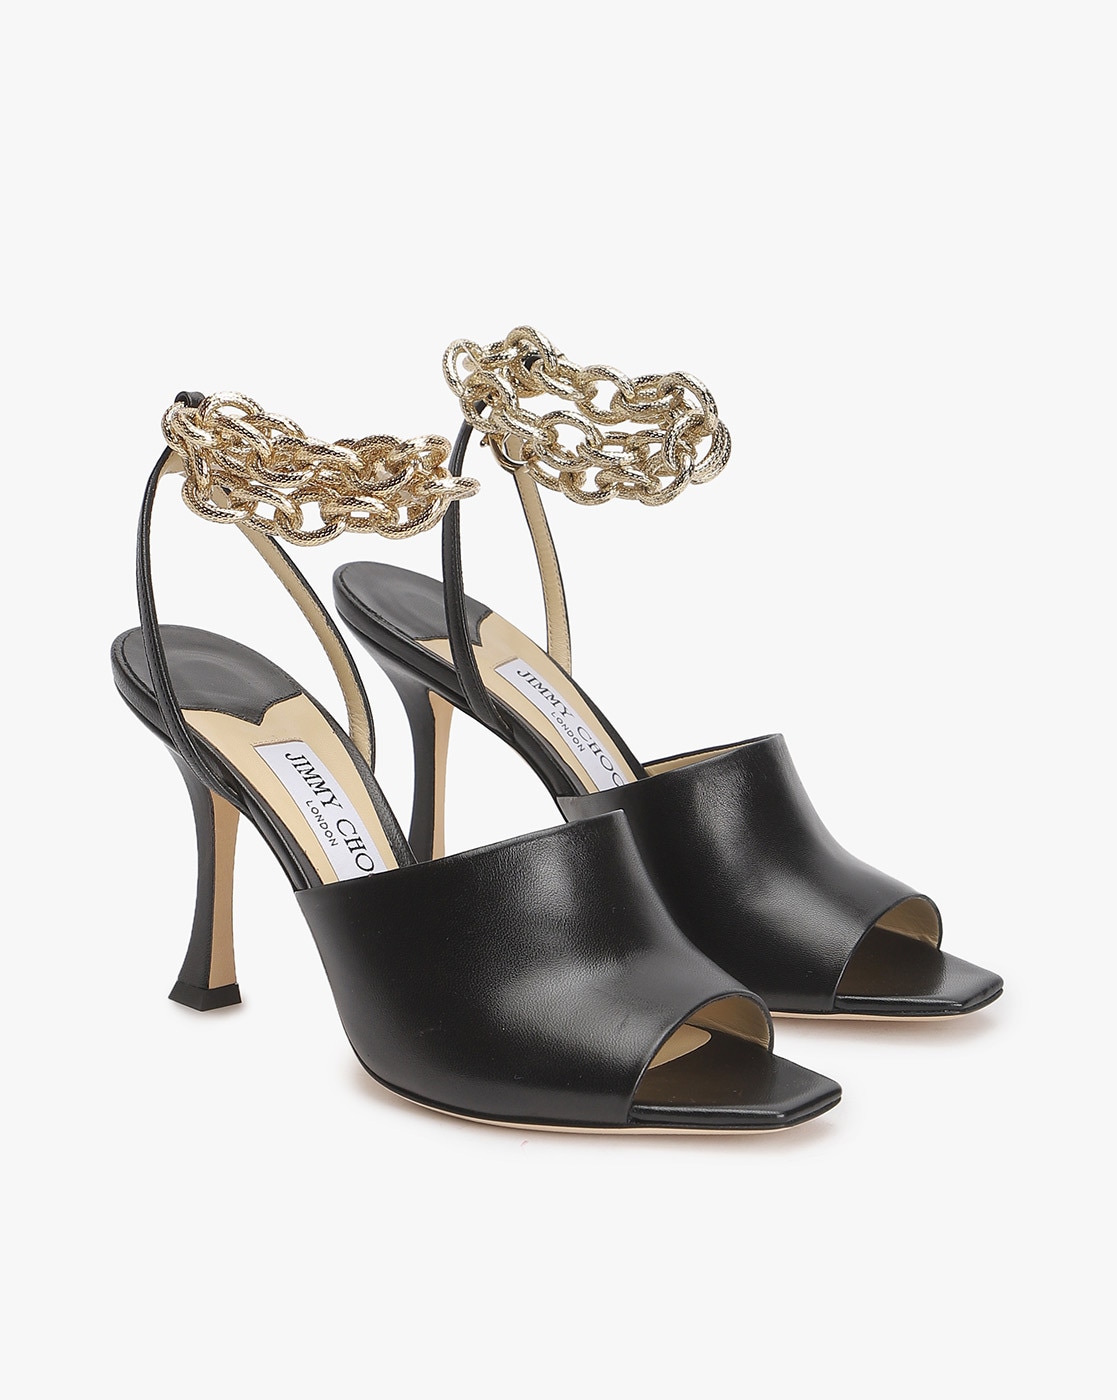 BEBO Black Heels with Gold Chain Detailing Size 5... - Depop